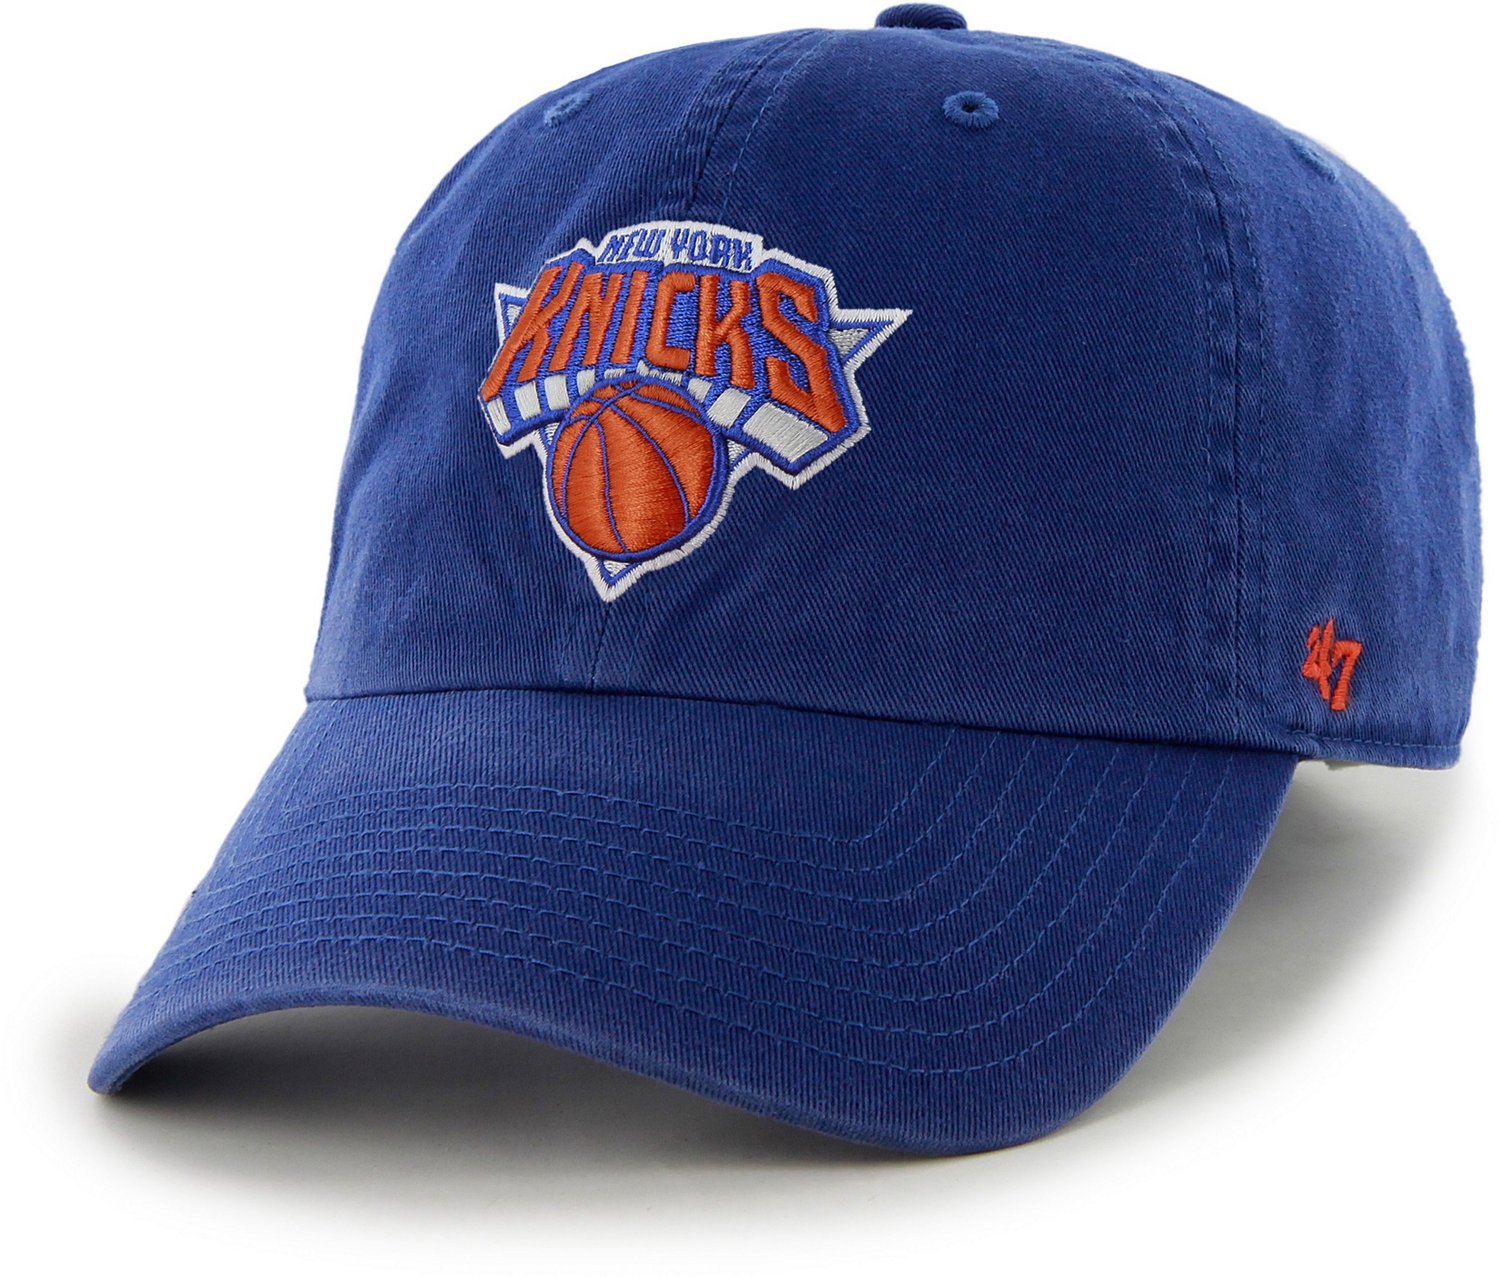 '47 New York Knicks Clean Up Cap | Academy